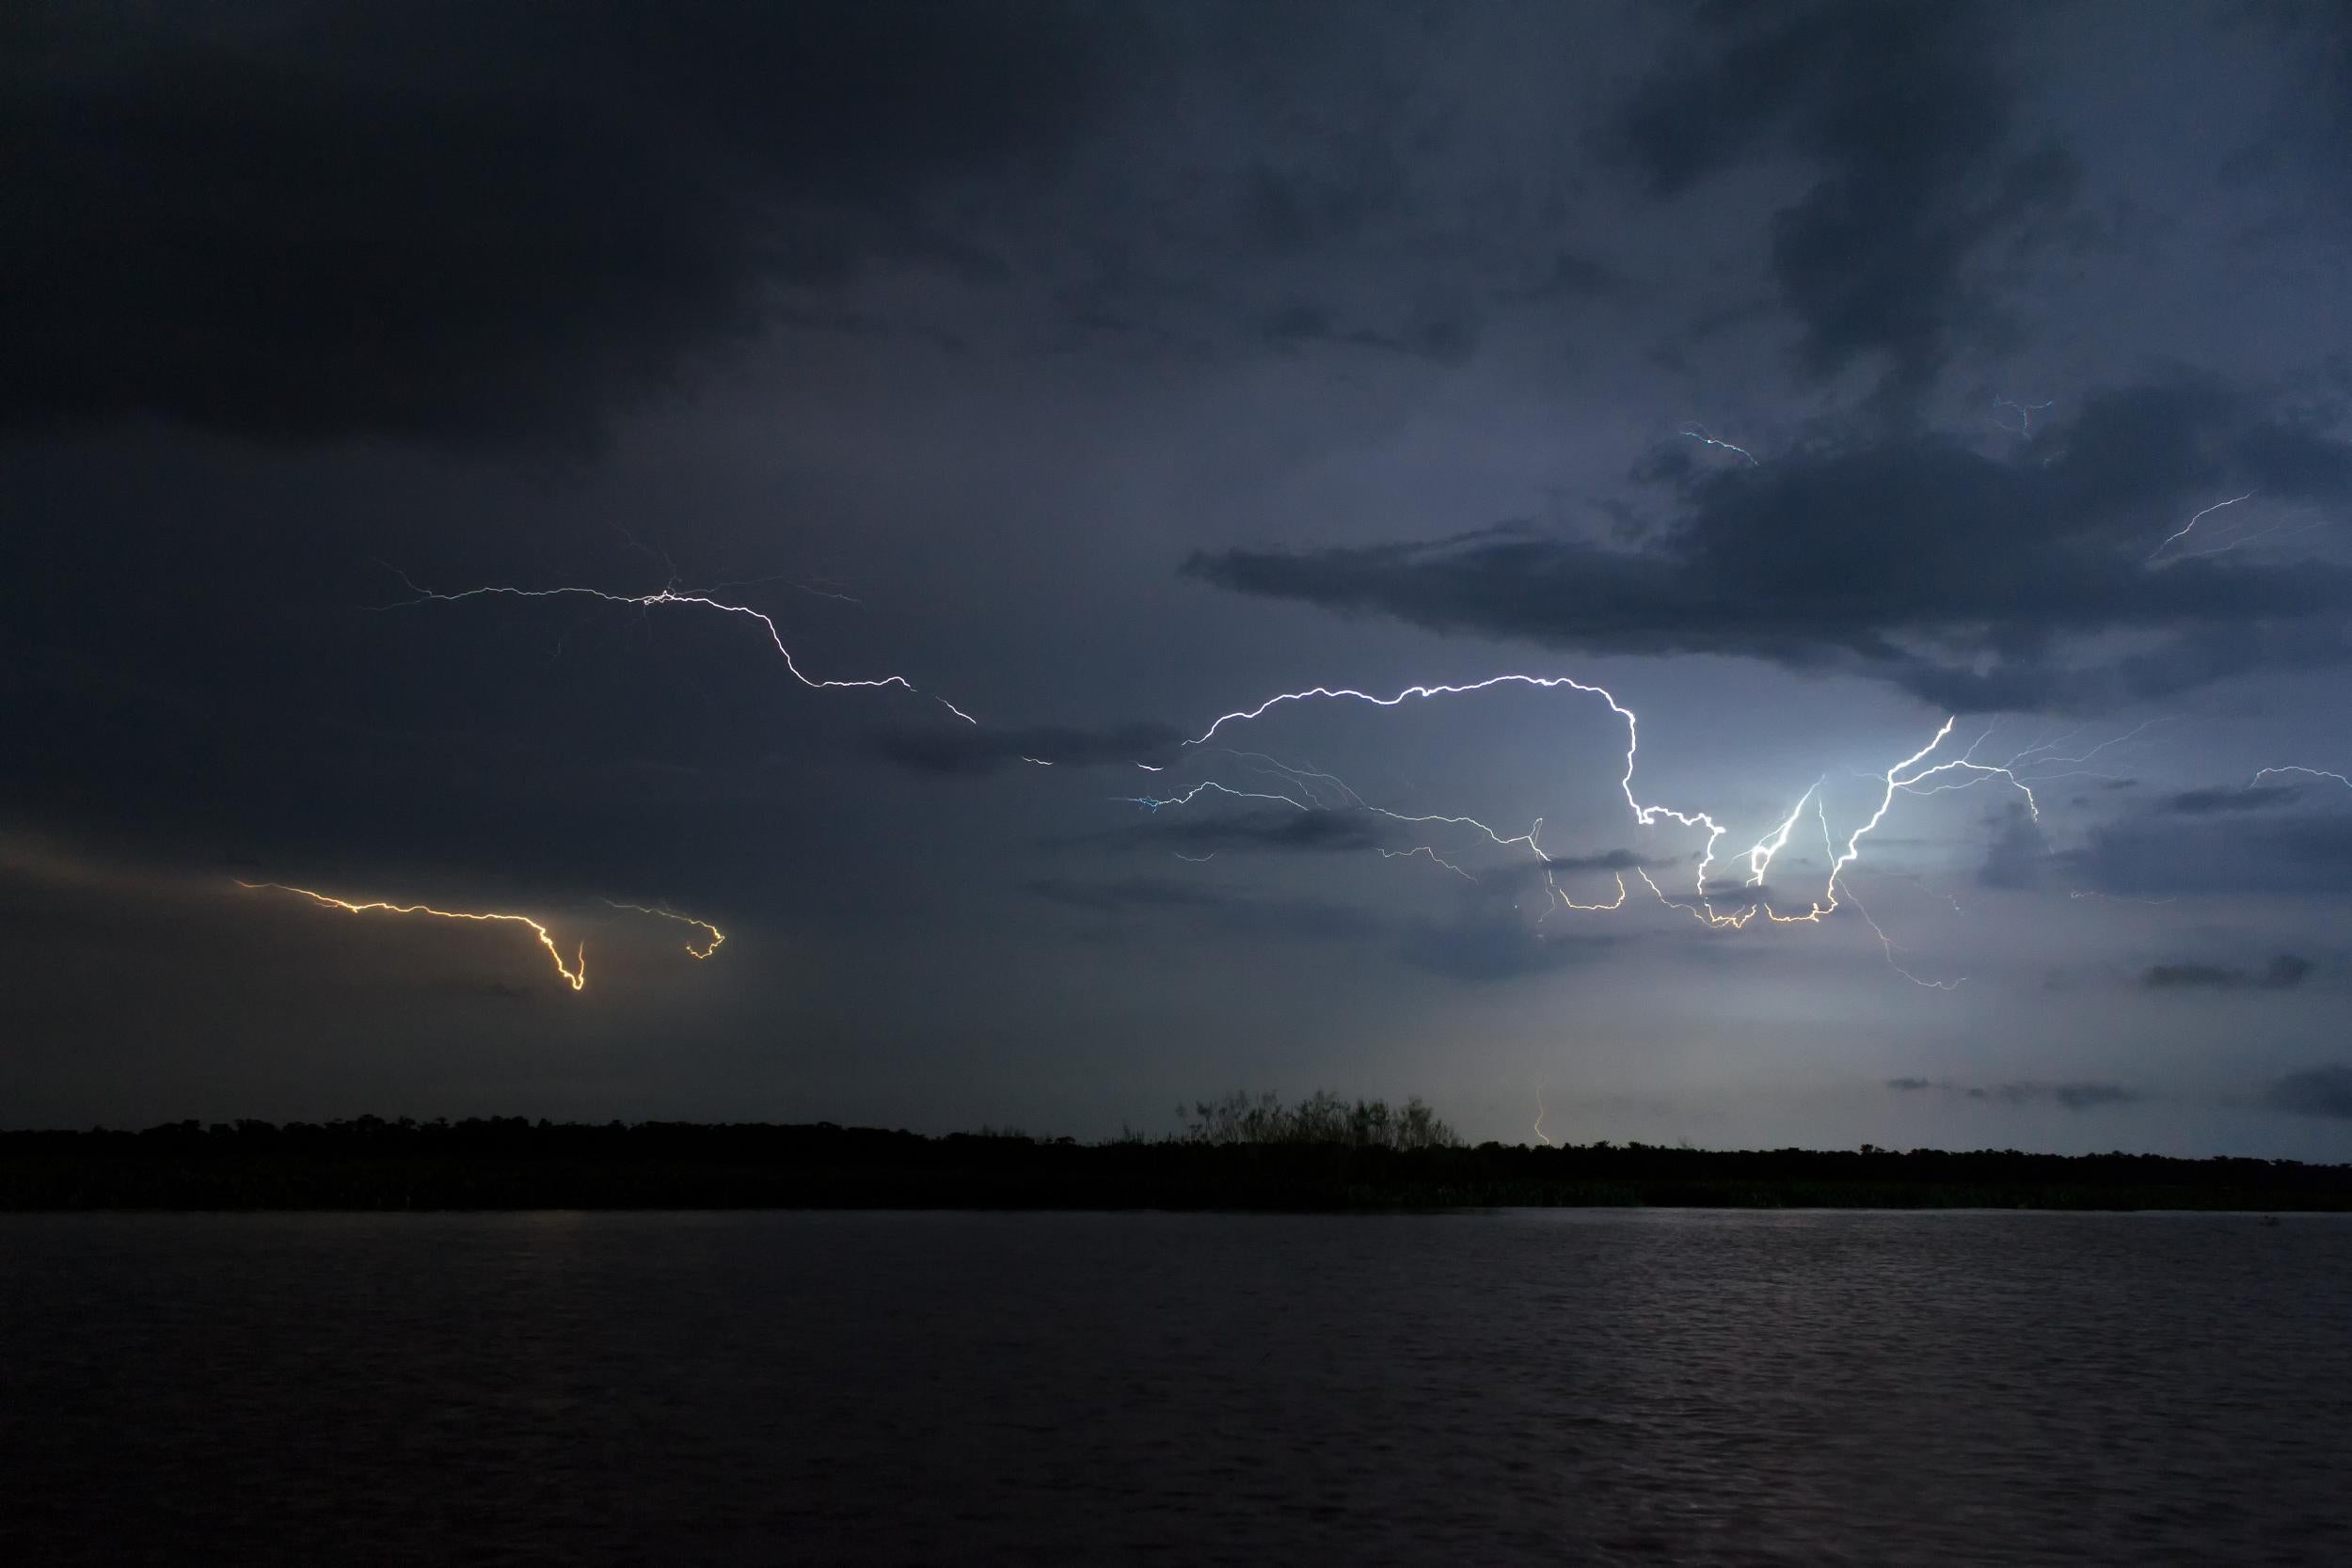 The Catatumbo Lightning over the Maracaibo lake (Fernando Flores )